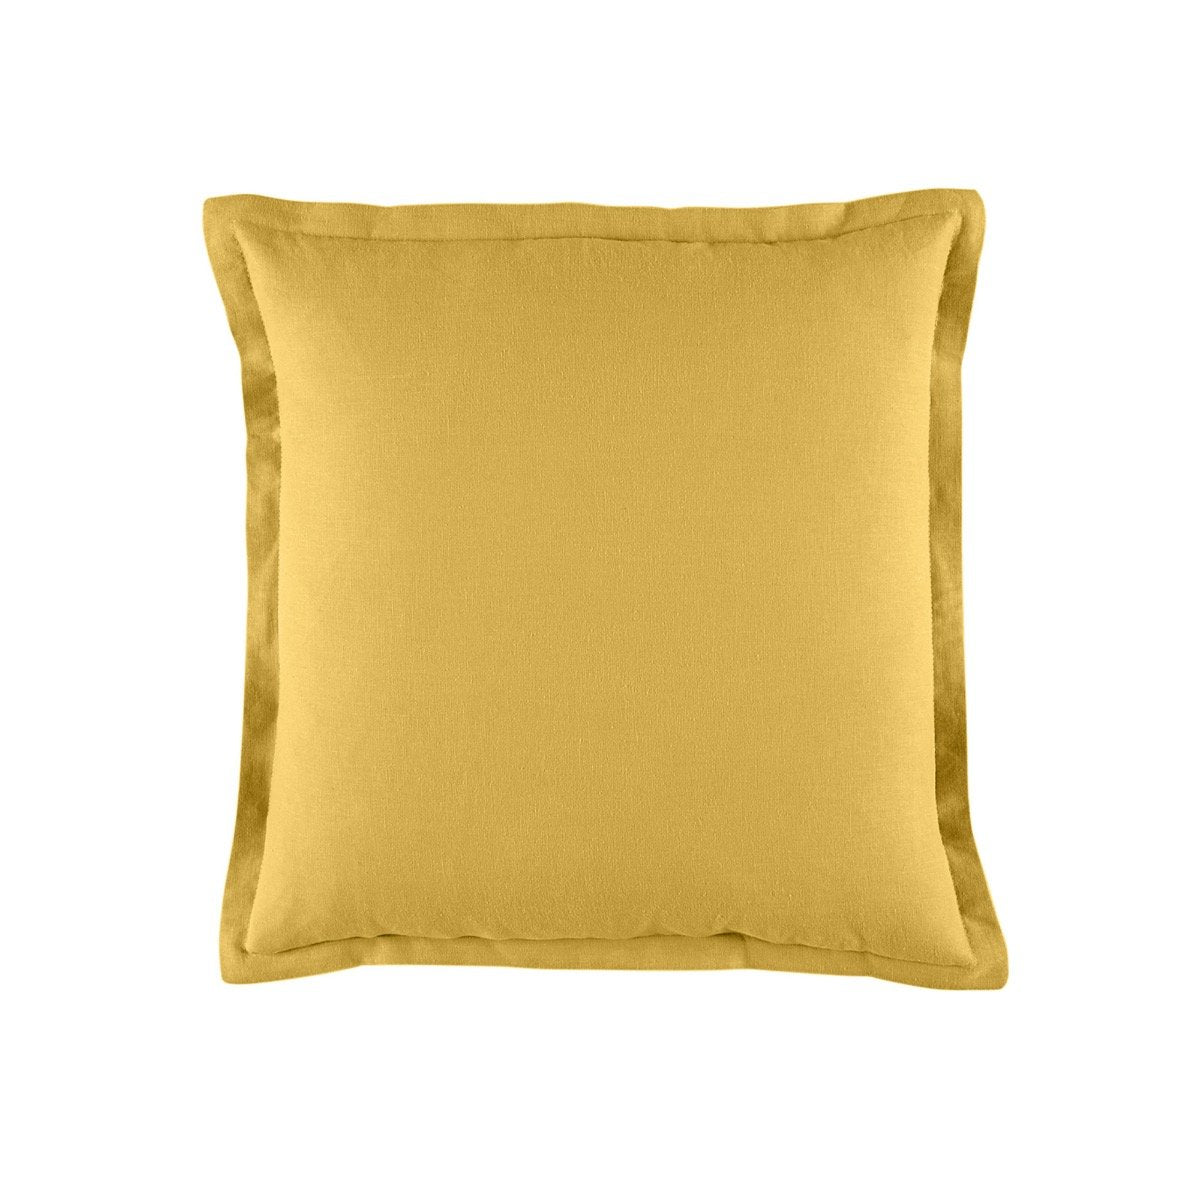 Wellington Gold Square Cushion 43x 43cm by Bianca